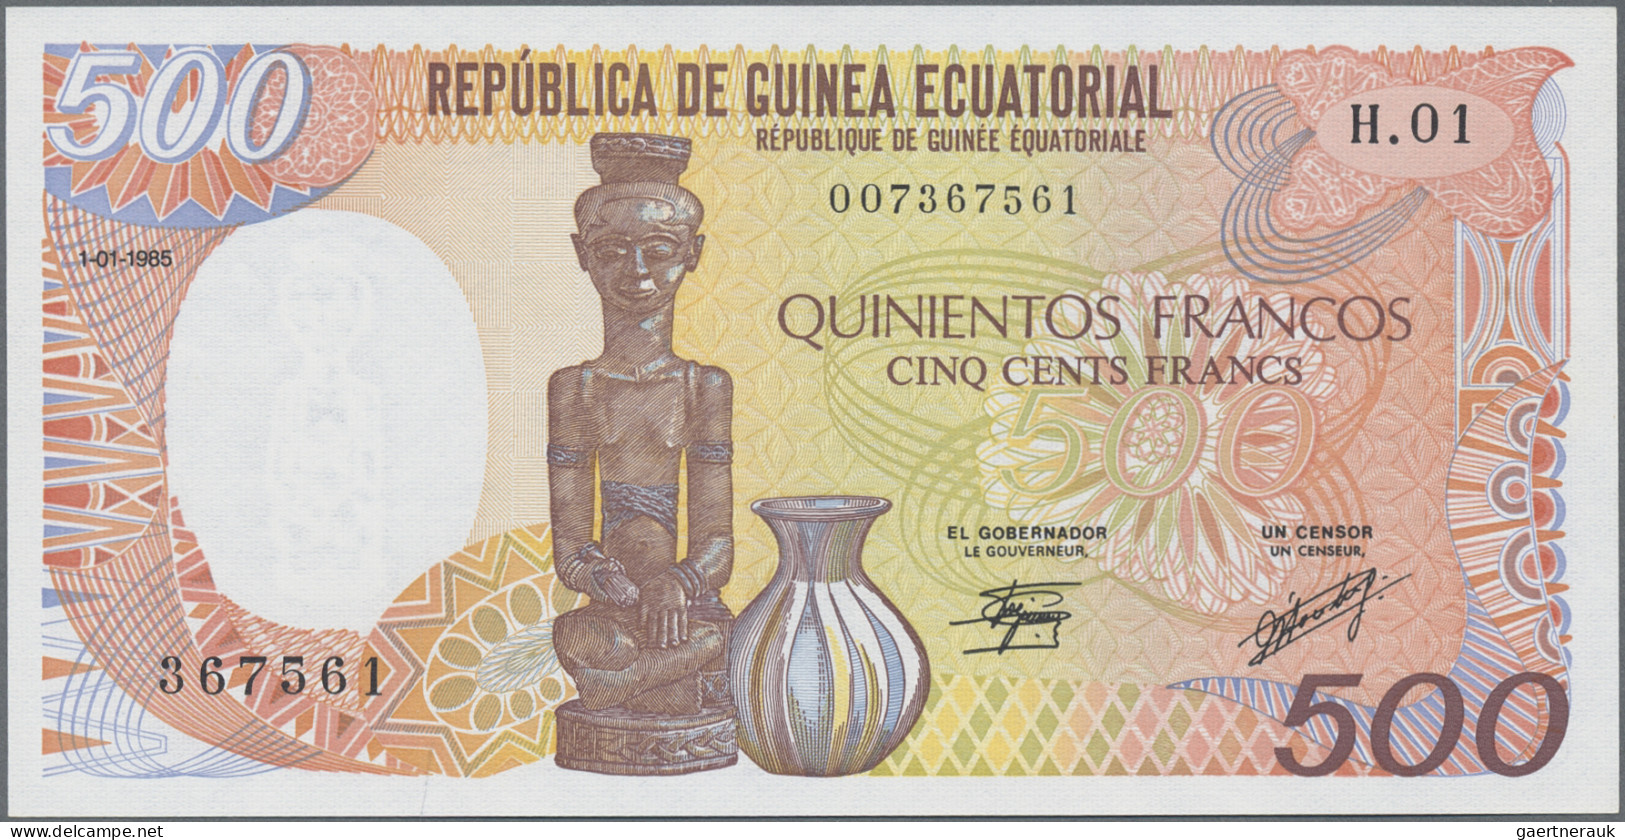 Equatorial Guinea: Banque Des États De L'Afrique Centrale - República De Guinea - Aequatorial-Guinea